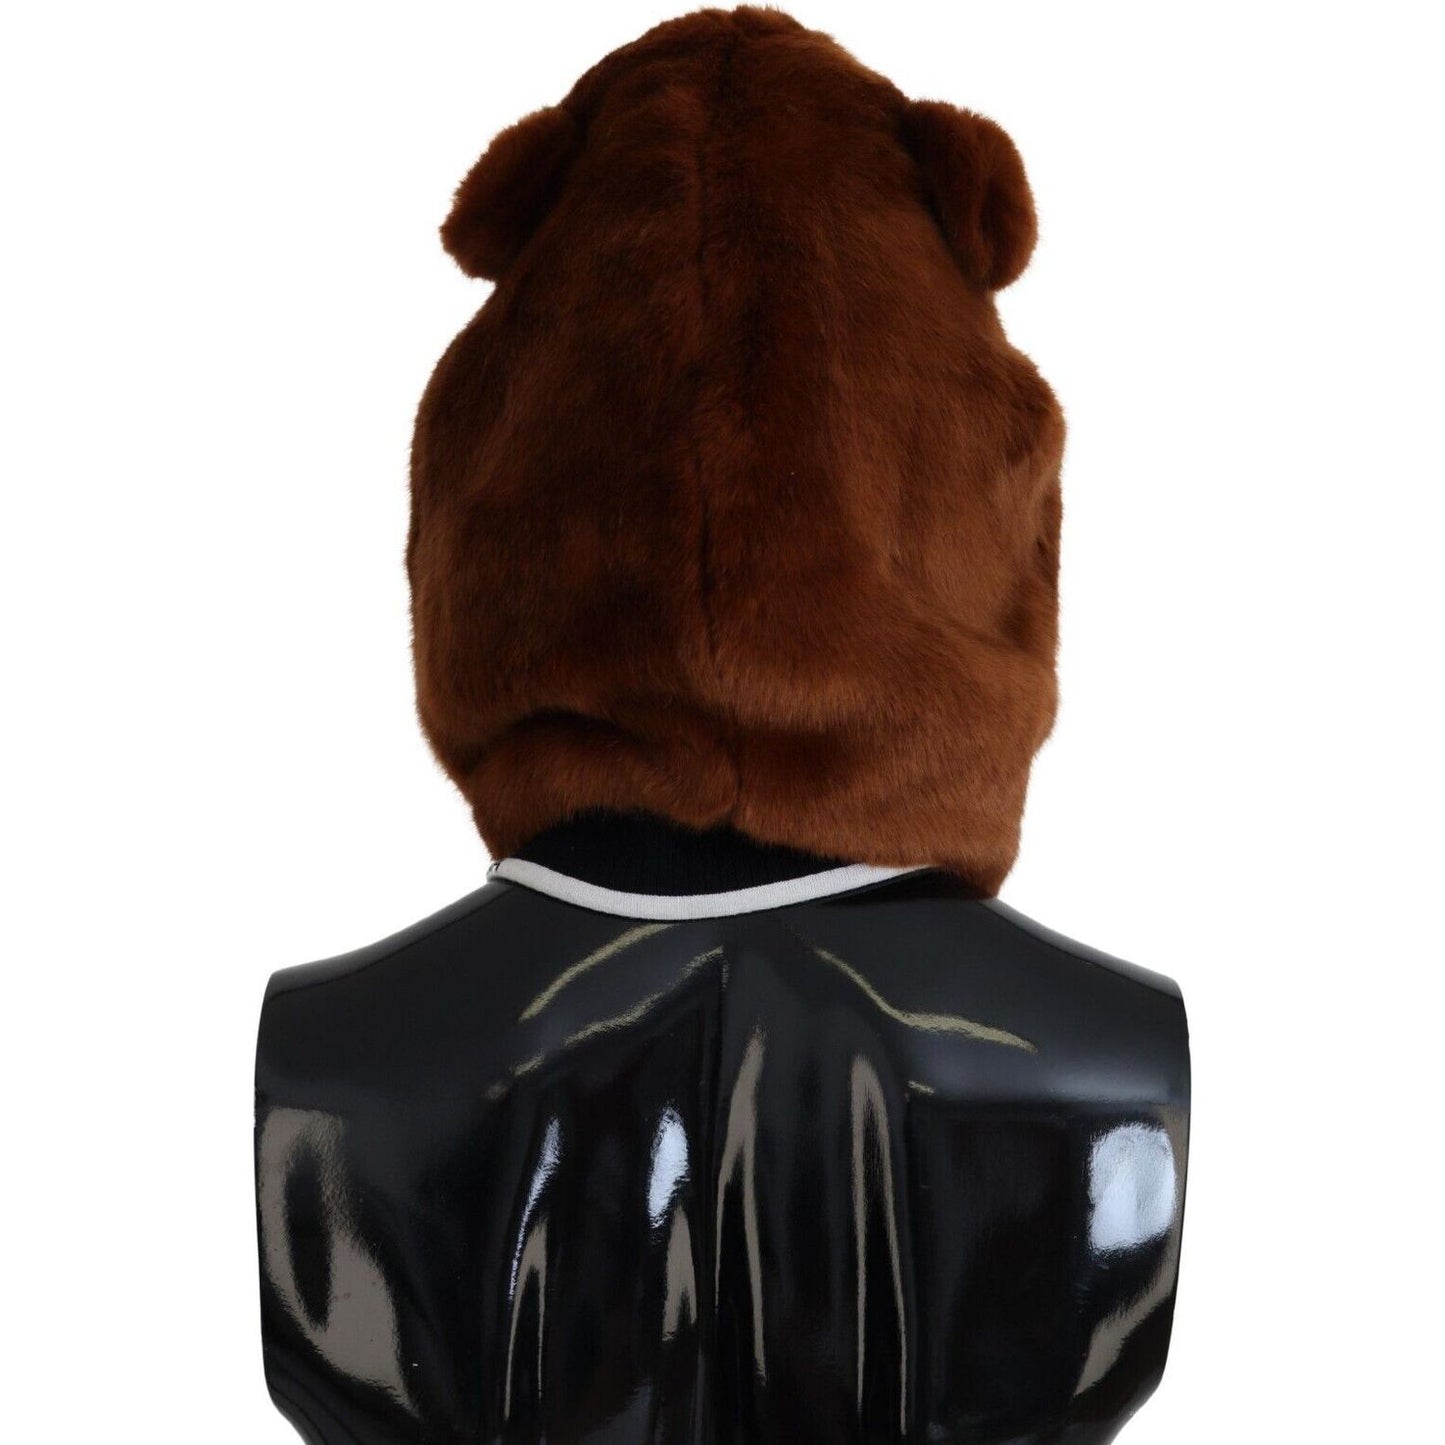 Elegant Whole Head Hat in Refined Brown Hue